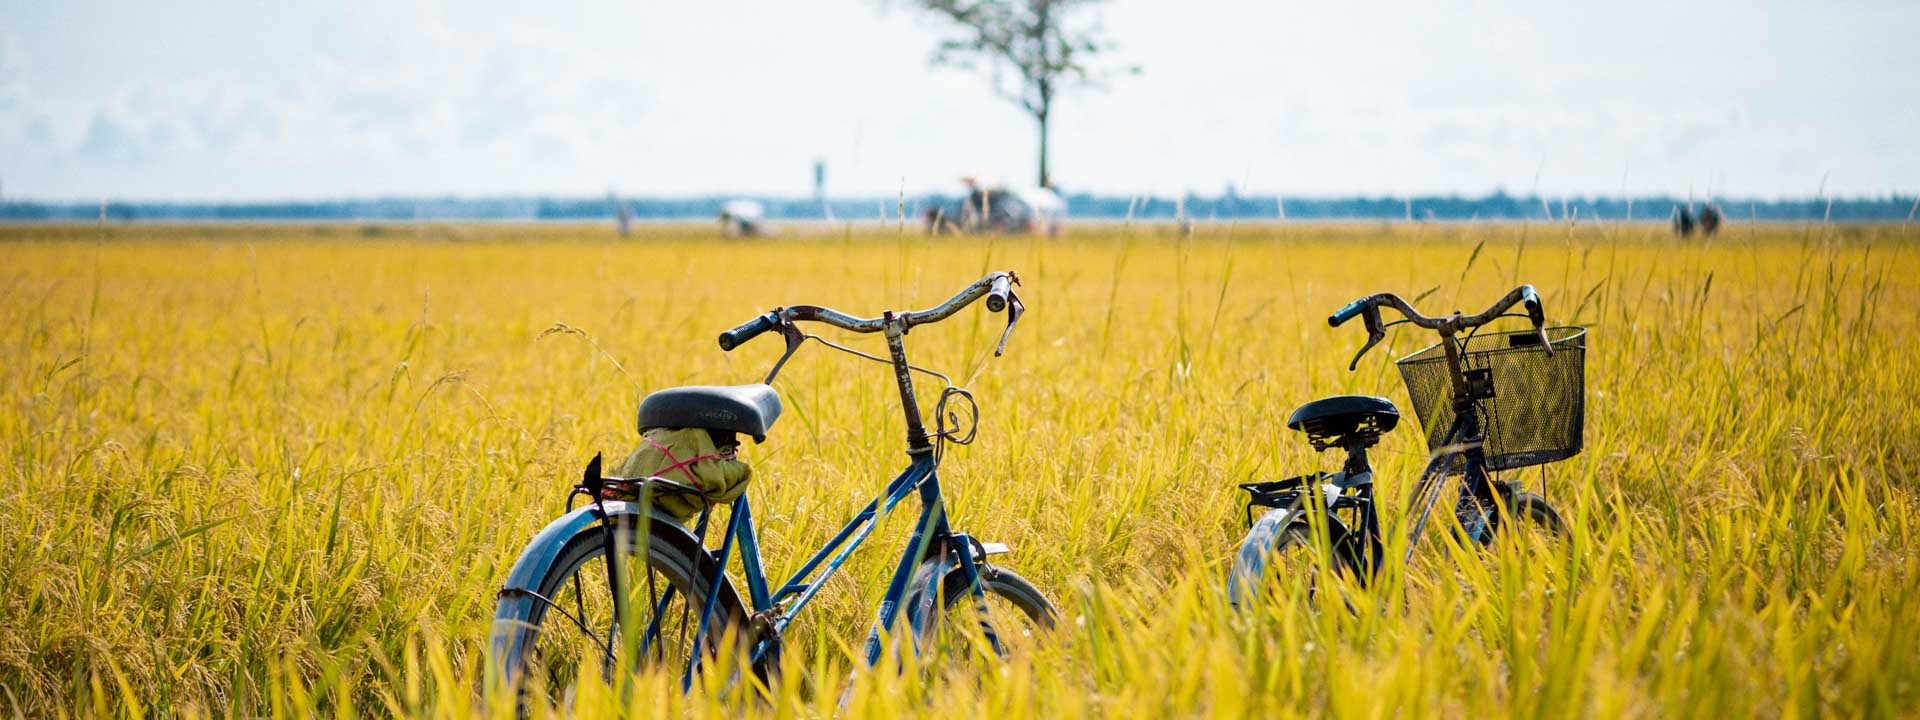 Luxe adventure Tour by Bike in Ninh Binh 3 days